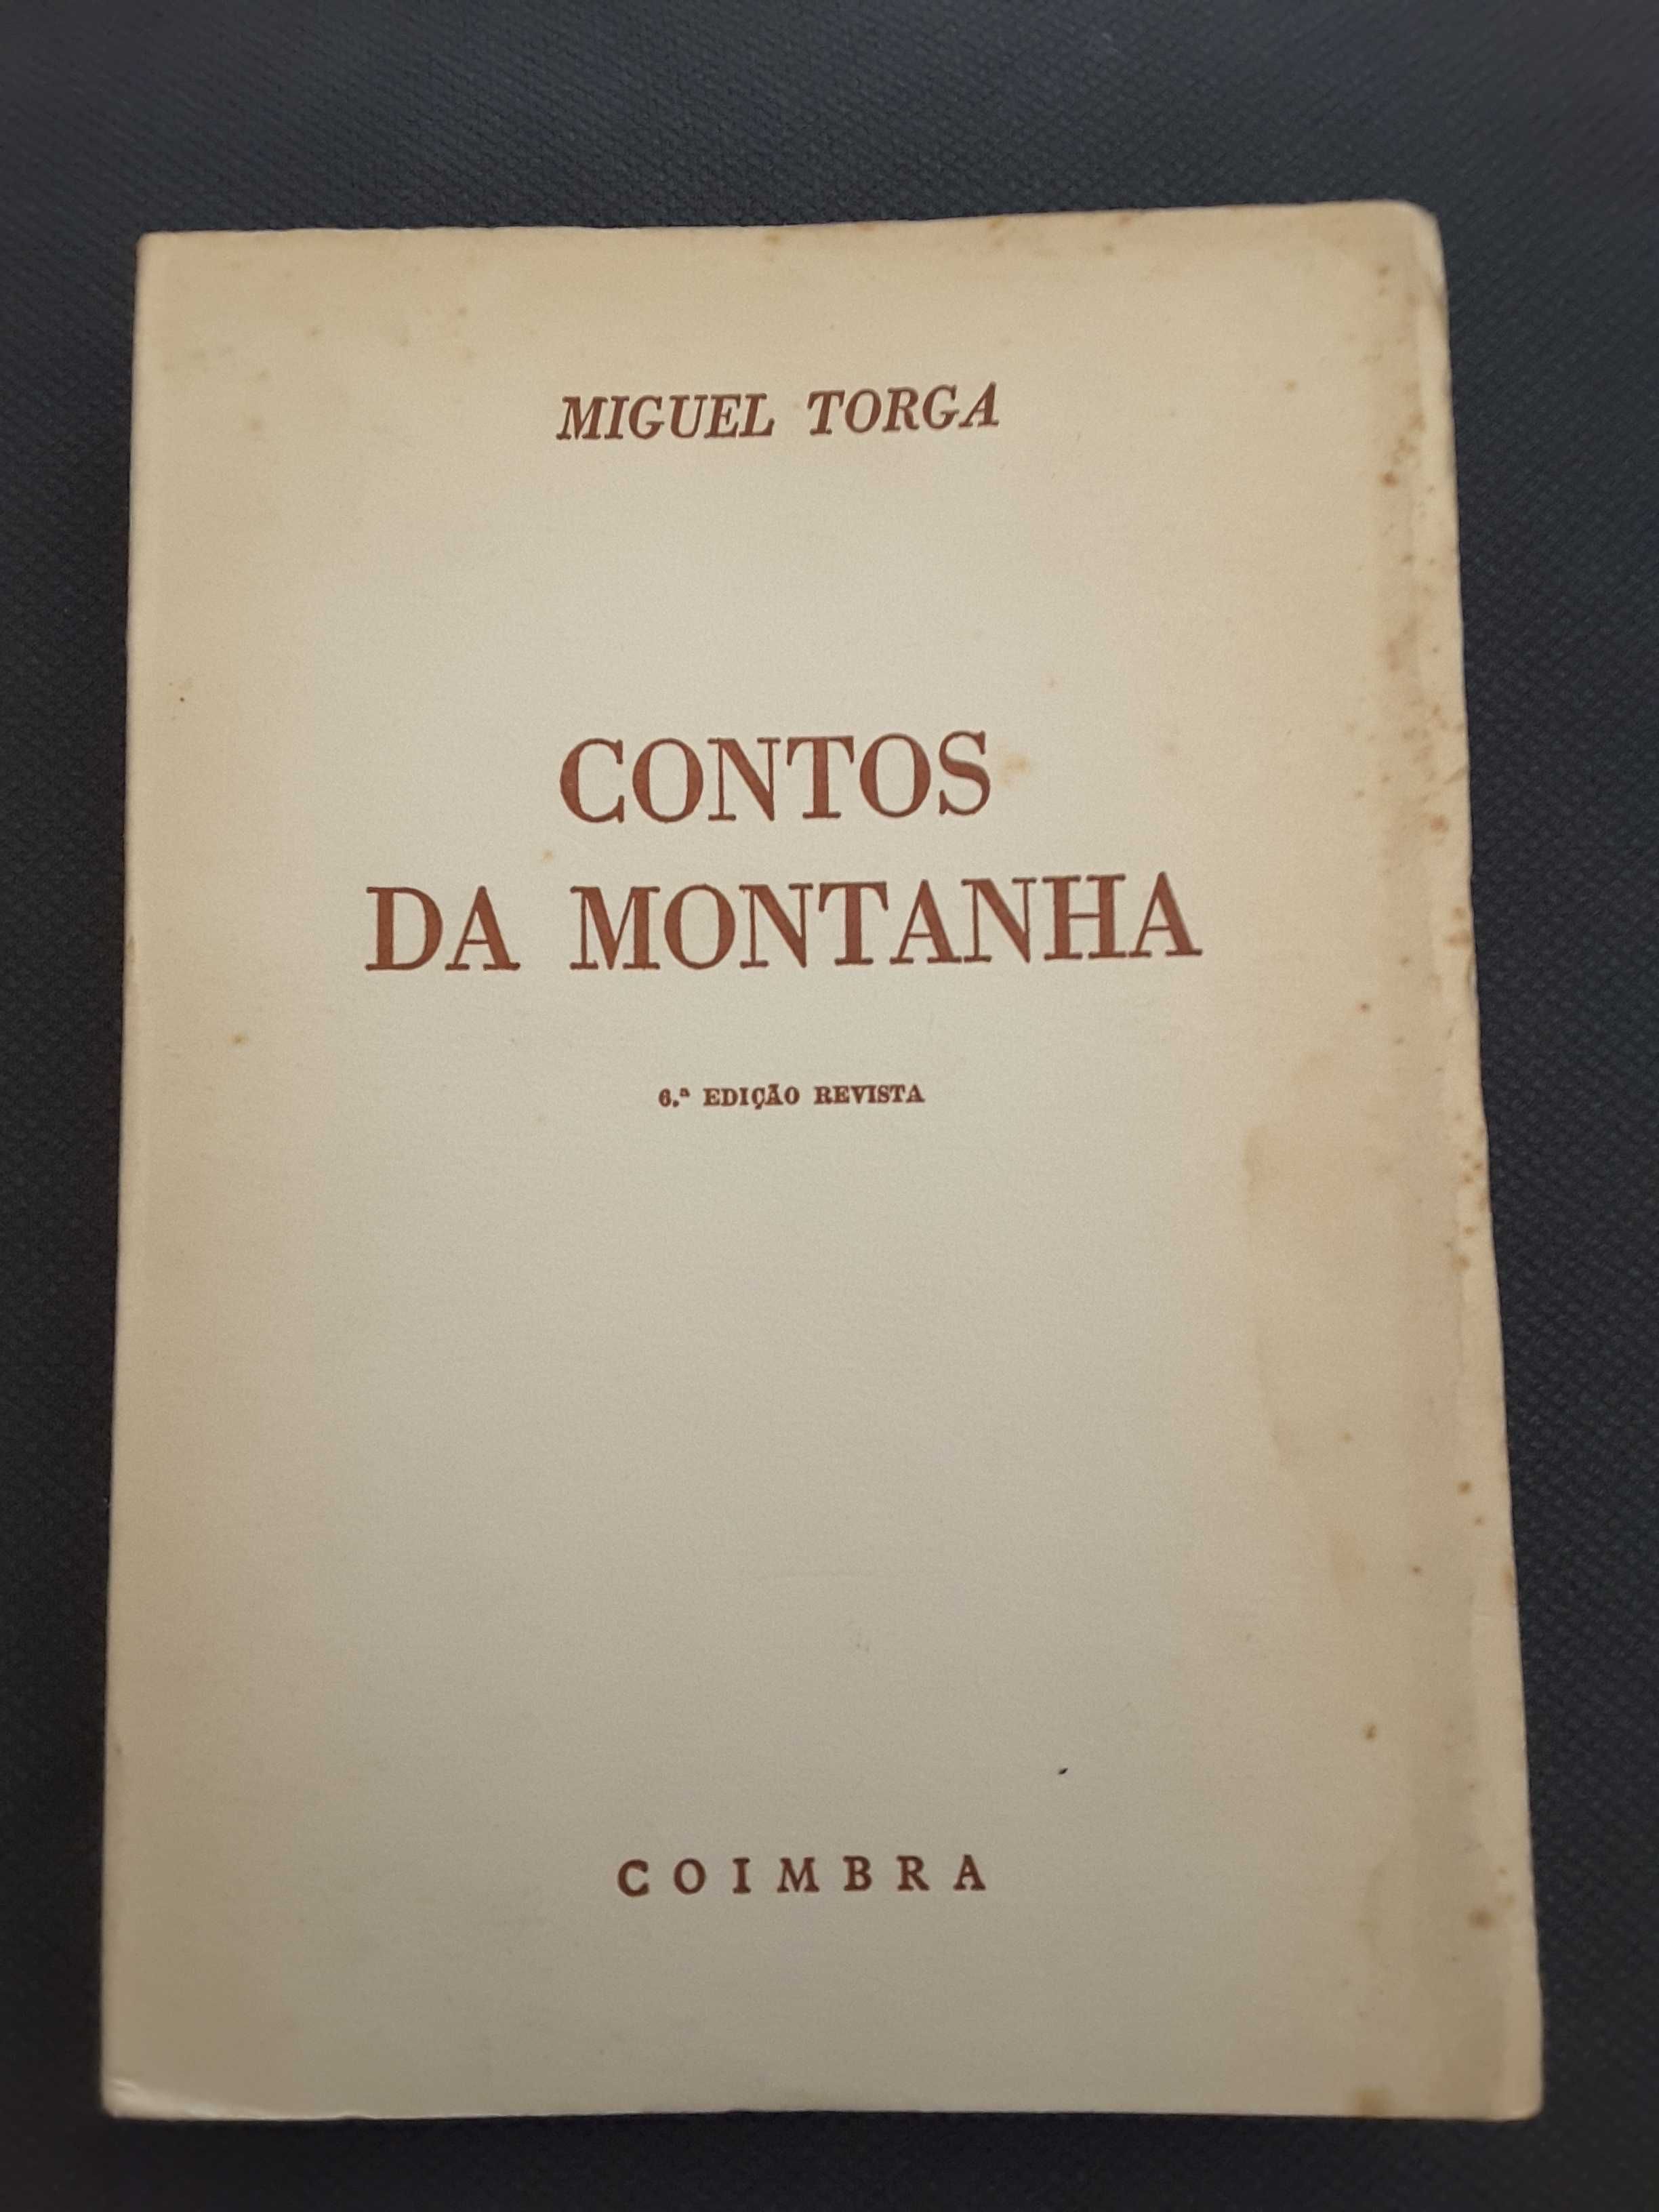 Ricardo Jorge/ Manuel de Seabra/ Miguel Torga /António Ferro